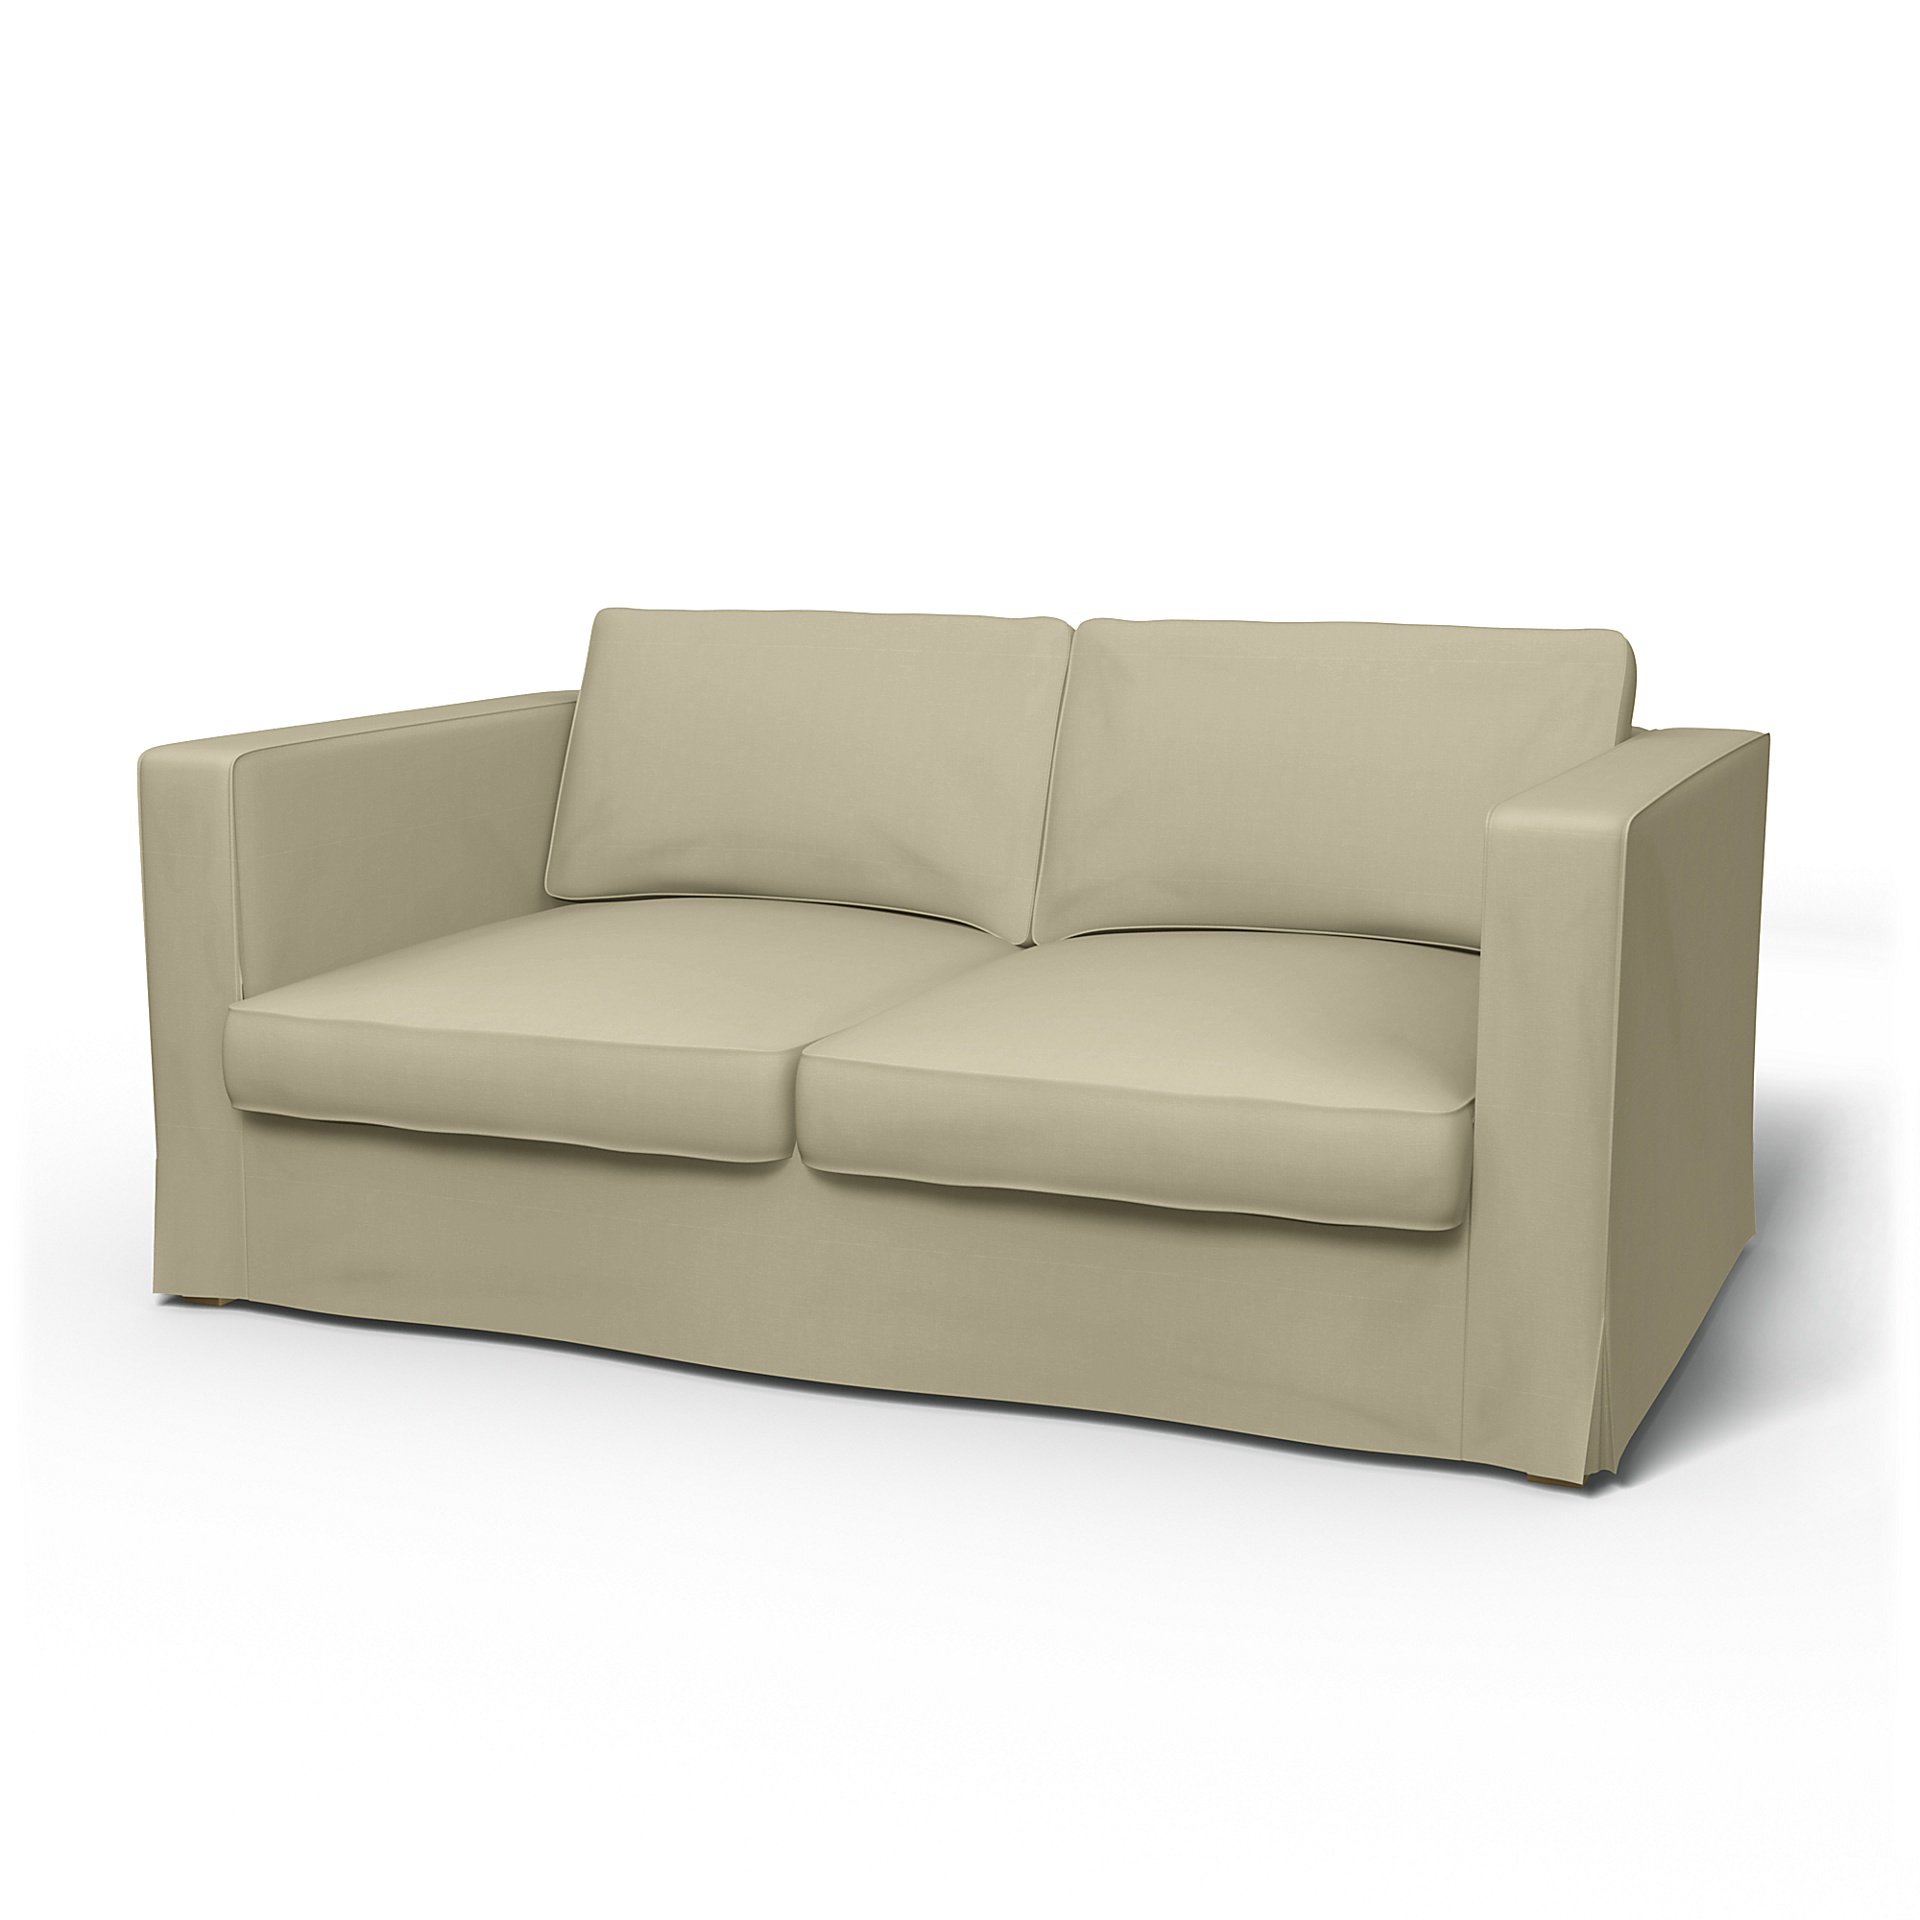 IKEA - Karlstad 2 Seater Sofa Cover, Sand Beige, Cotton - Bemz